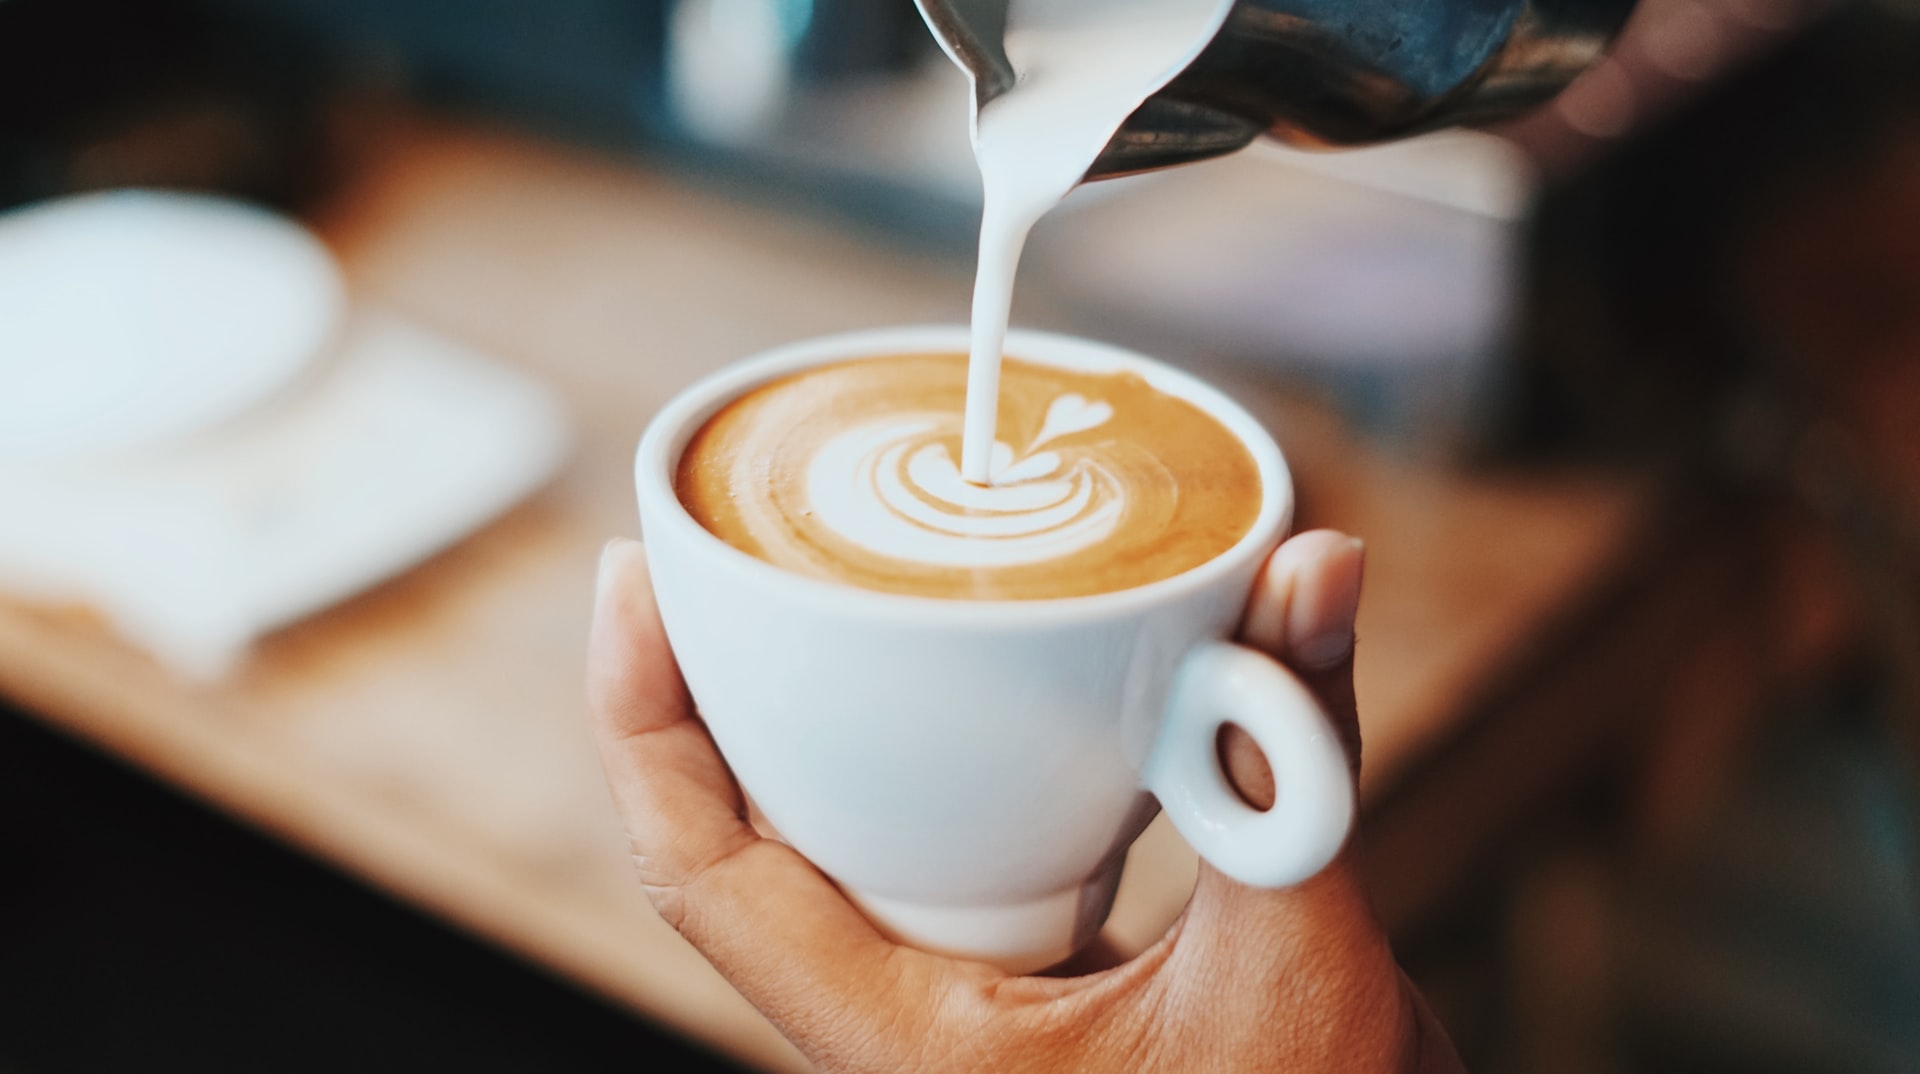 A barista pours cream into a coffee cup